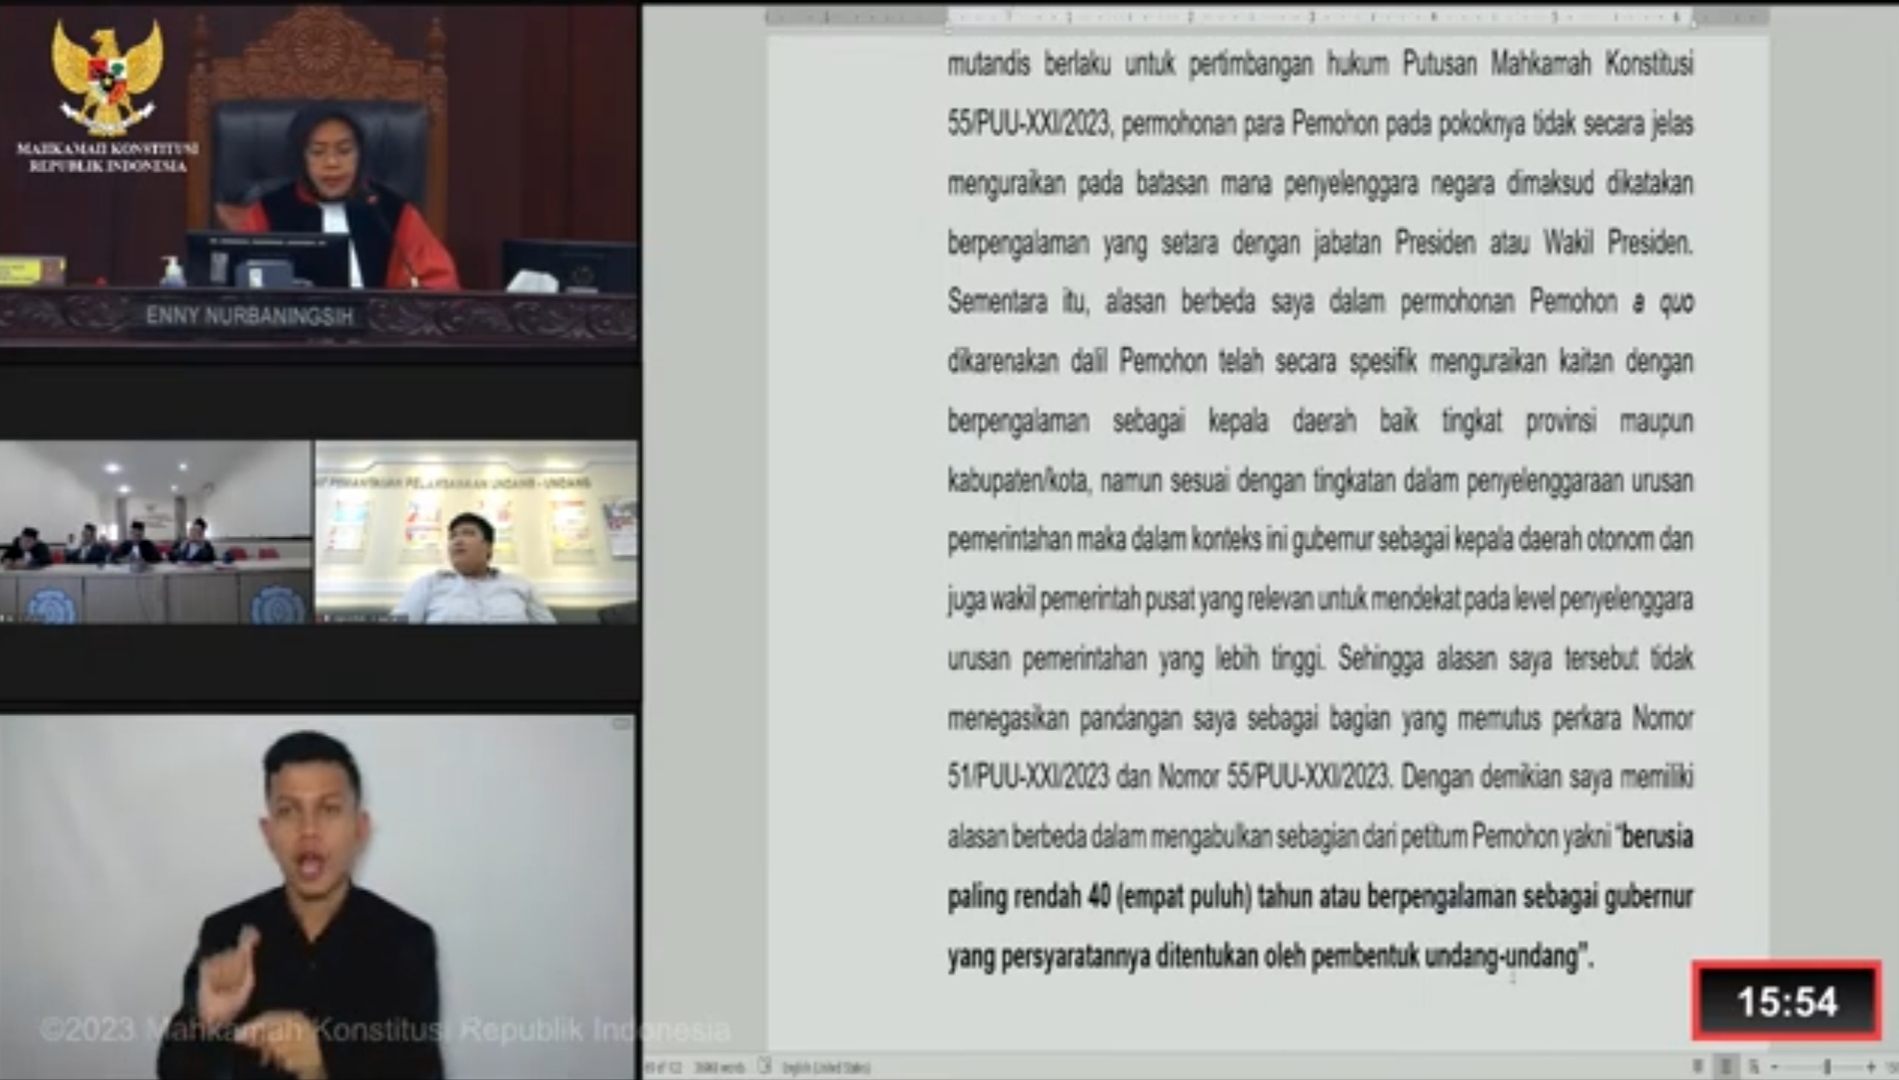 Alasan Berbeda Hakim MK Enny Nurbaningsih Soal Syarat Pengalaman Kepala Daerah